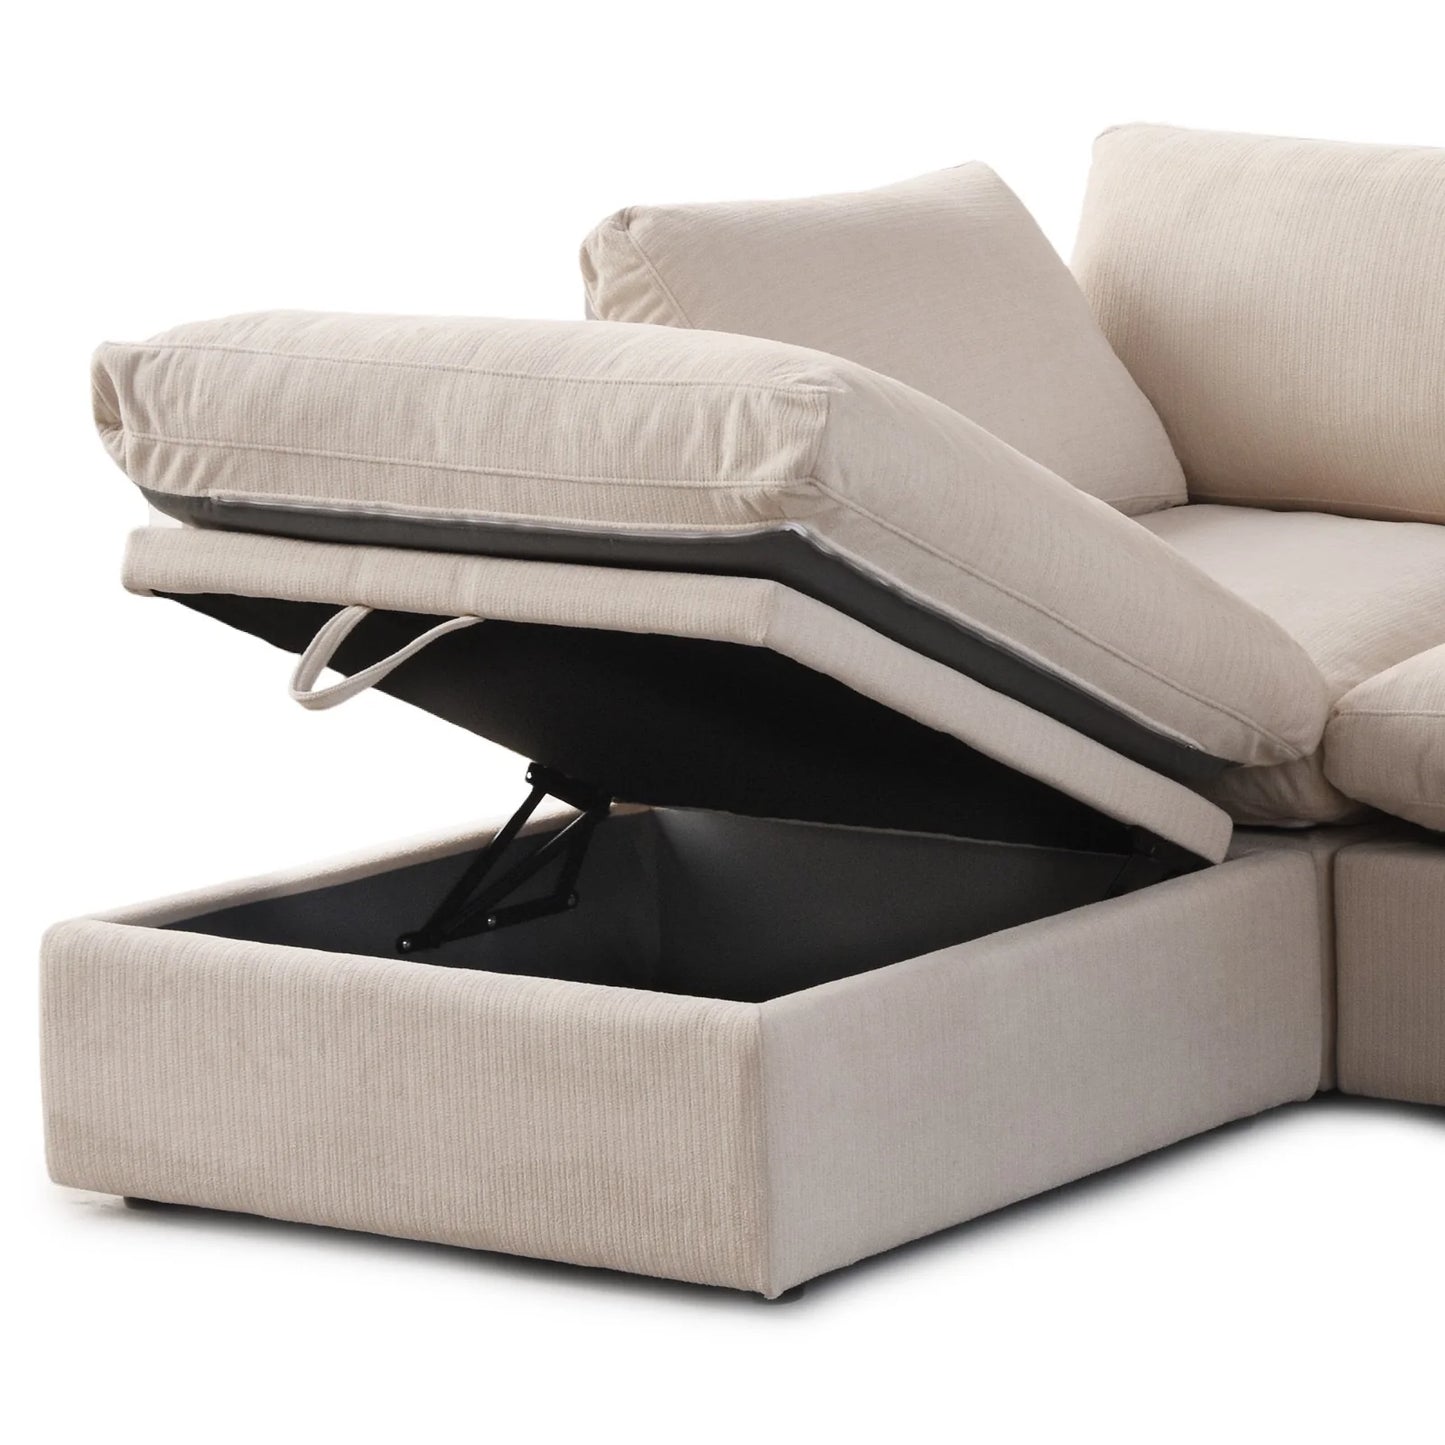 Comfy Cloud 5-piece Sectional Sofa - Beige - New